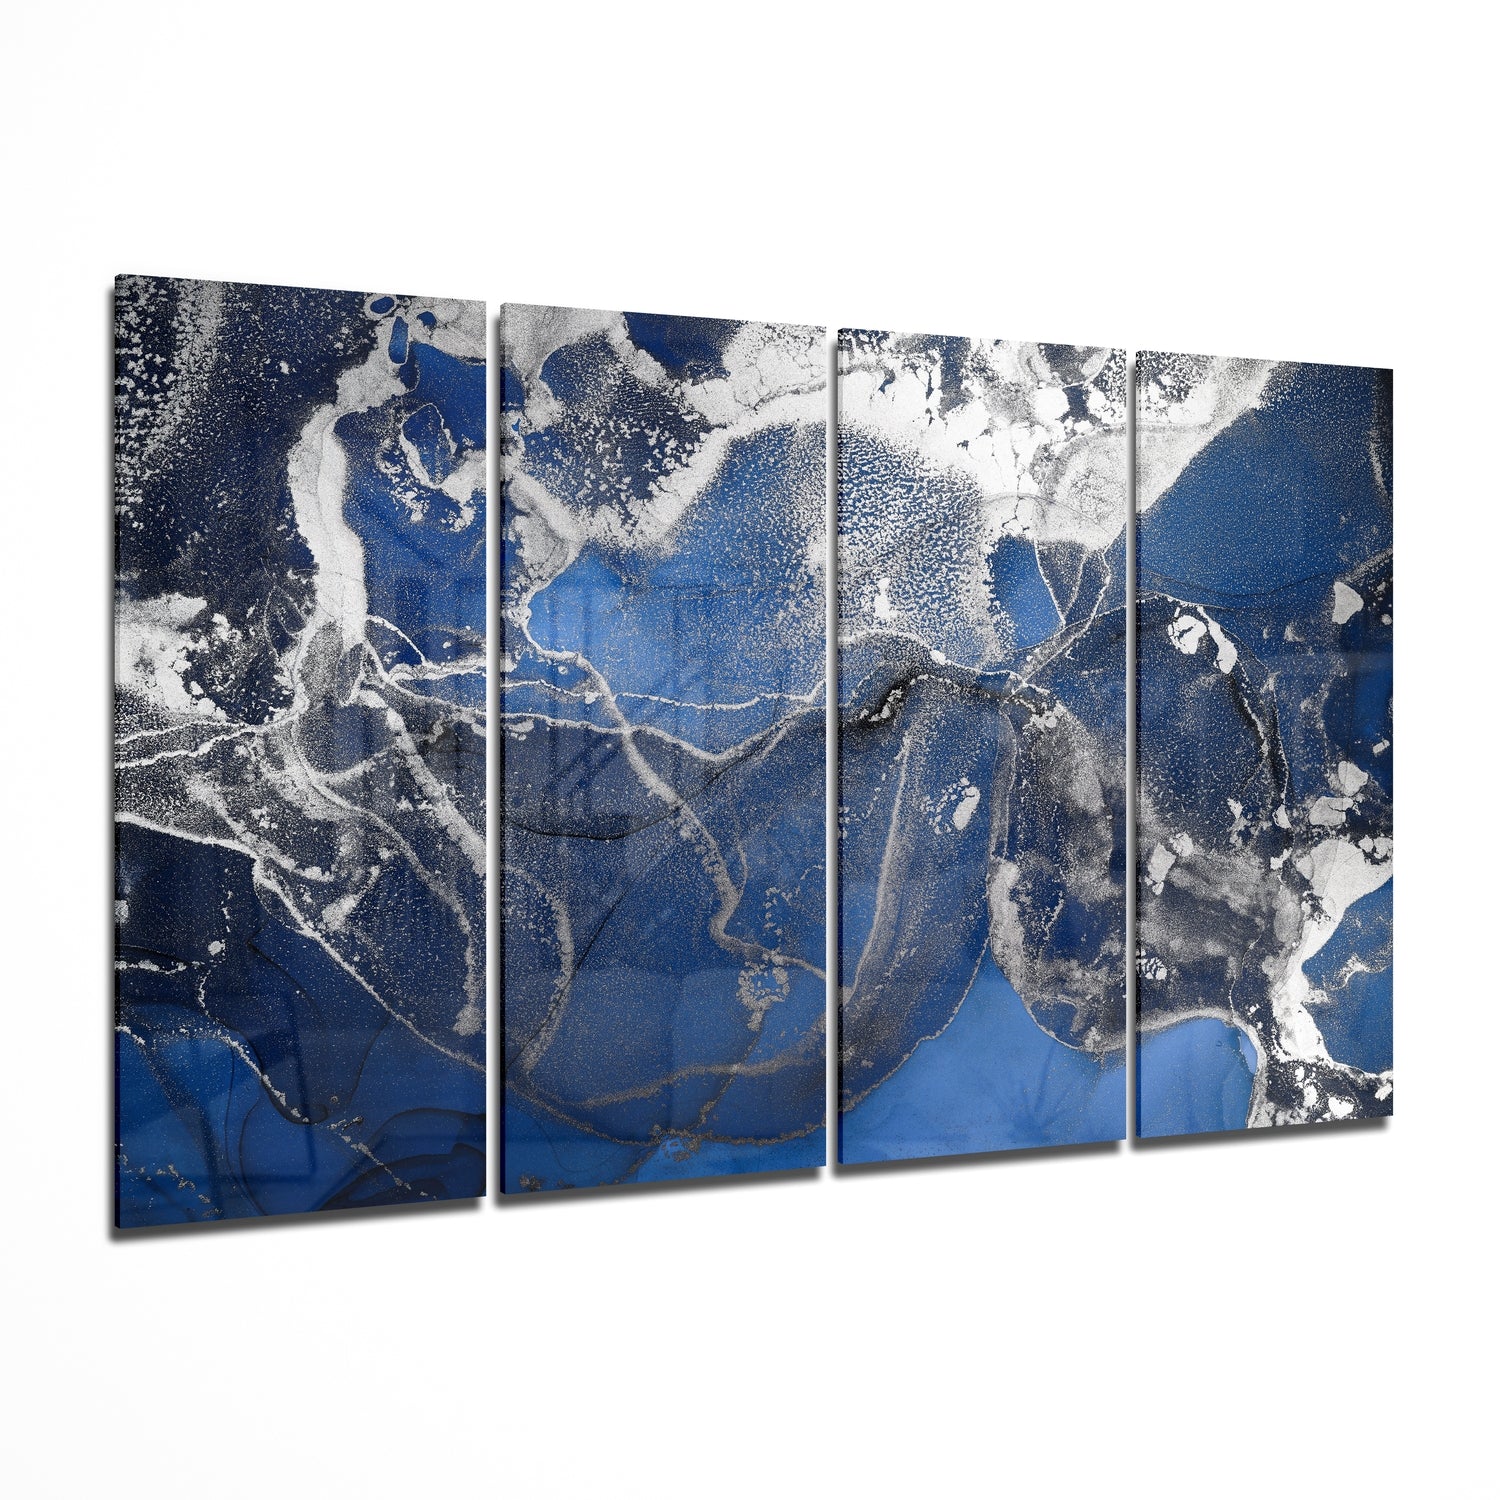 Marble 4 Pieces Mega Glass Wall Art (150x92 cm)